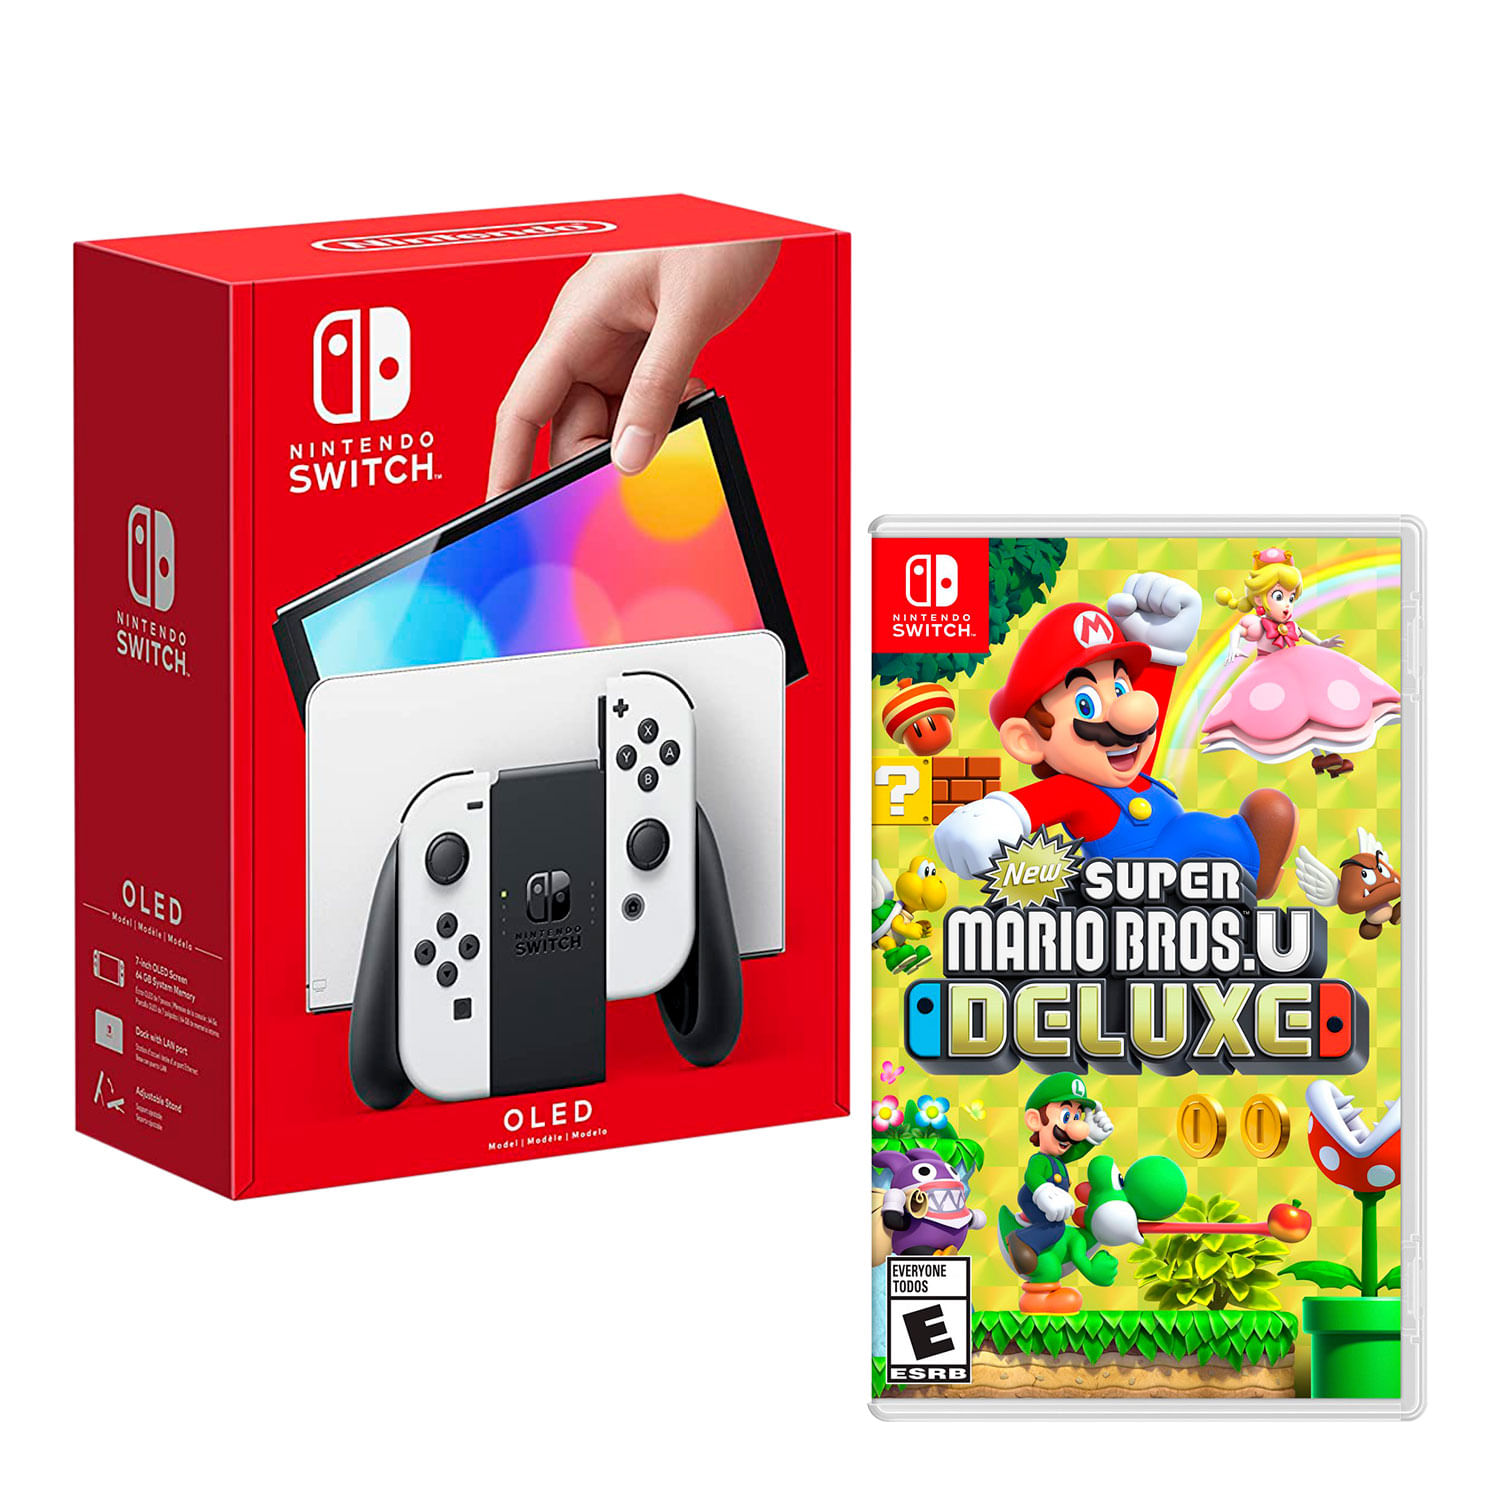 Consola Nintendo Switch Modelo Oled Blanco + New Super Mario Bros U